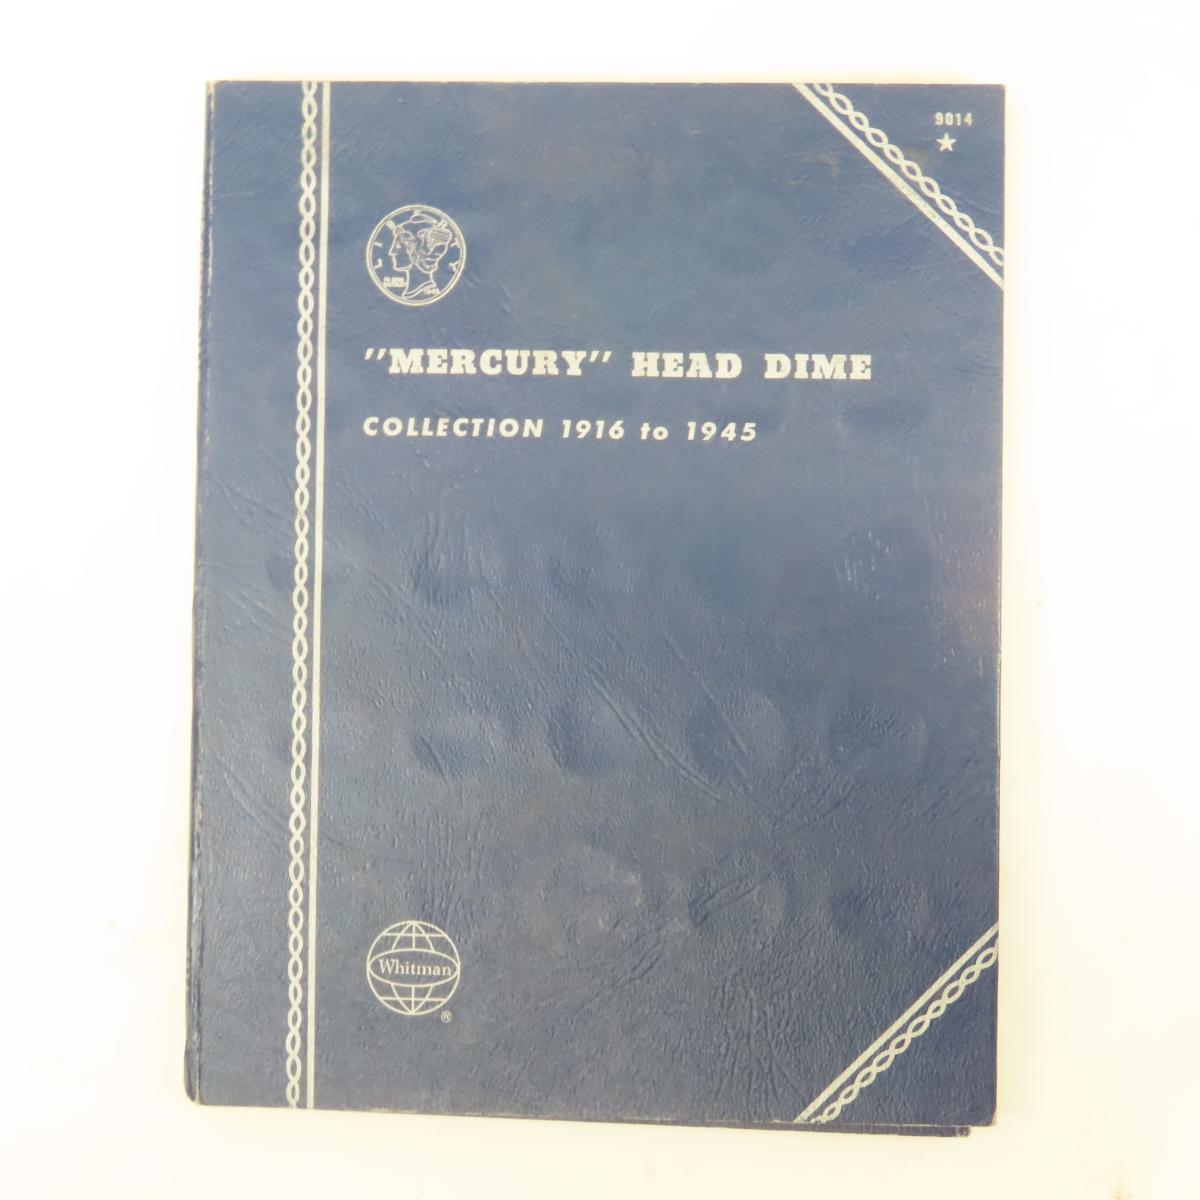 55 Mercury Dimes in 3 partial books 1917-1945